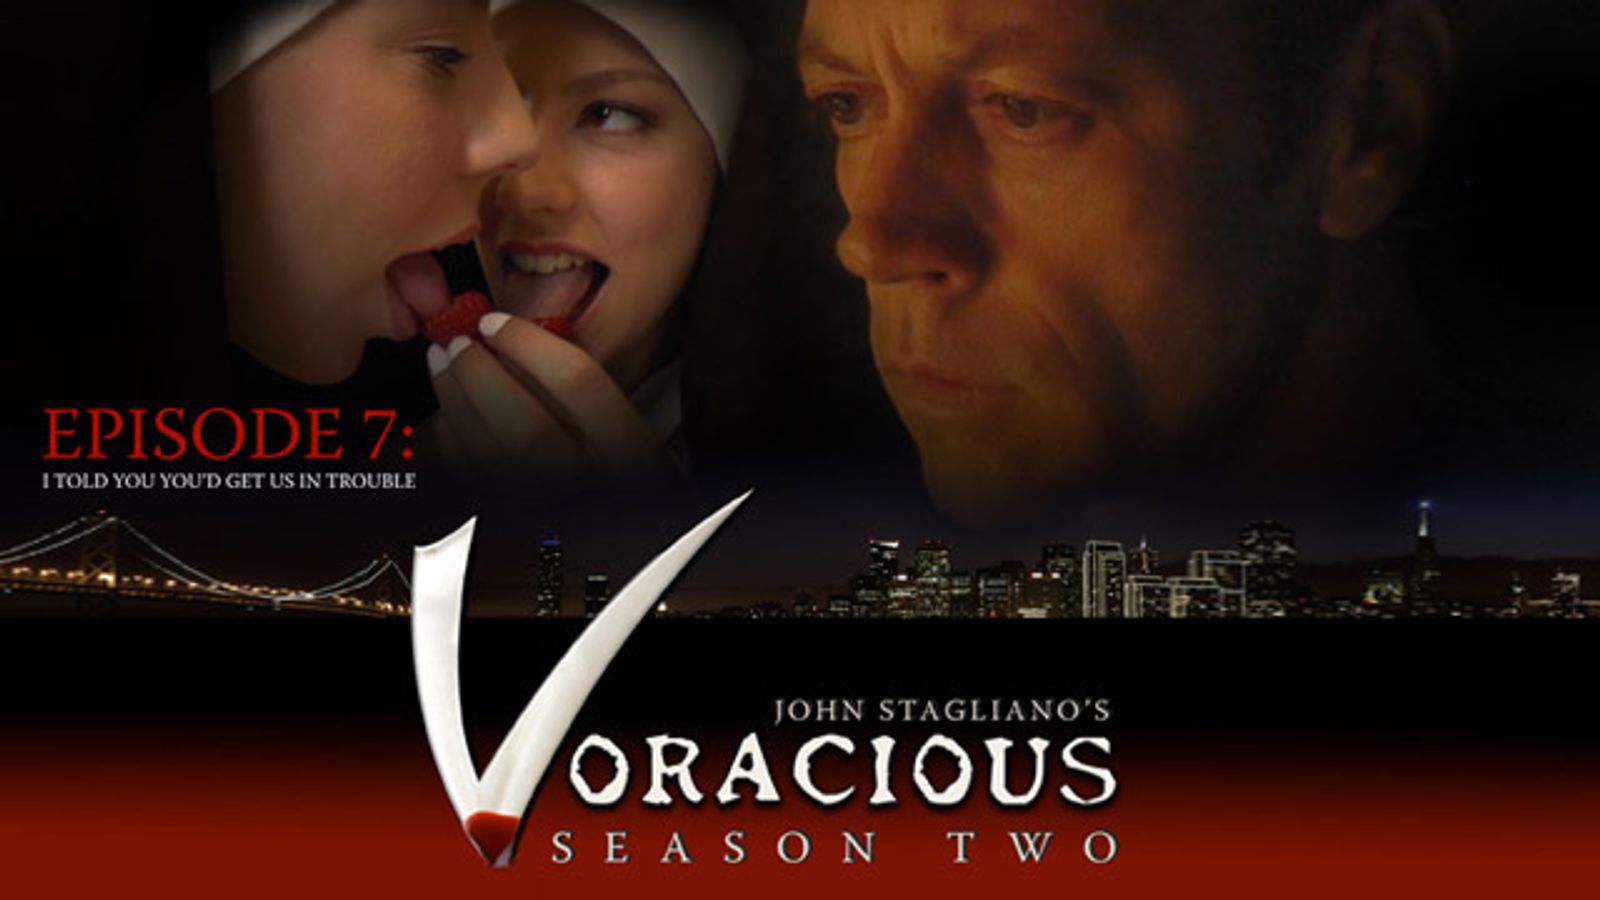 ‘Voracious Season Two’: 7th Webisode Is Live On EvilAngel.com